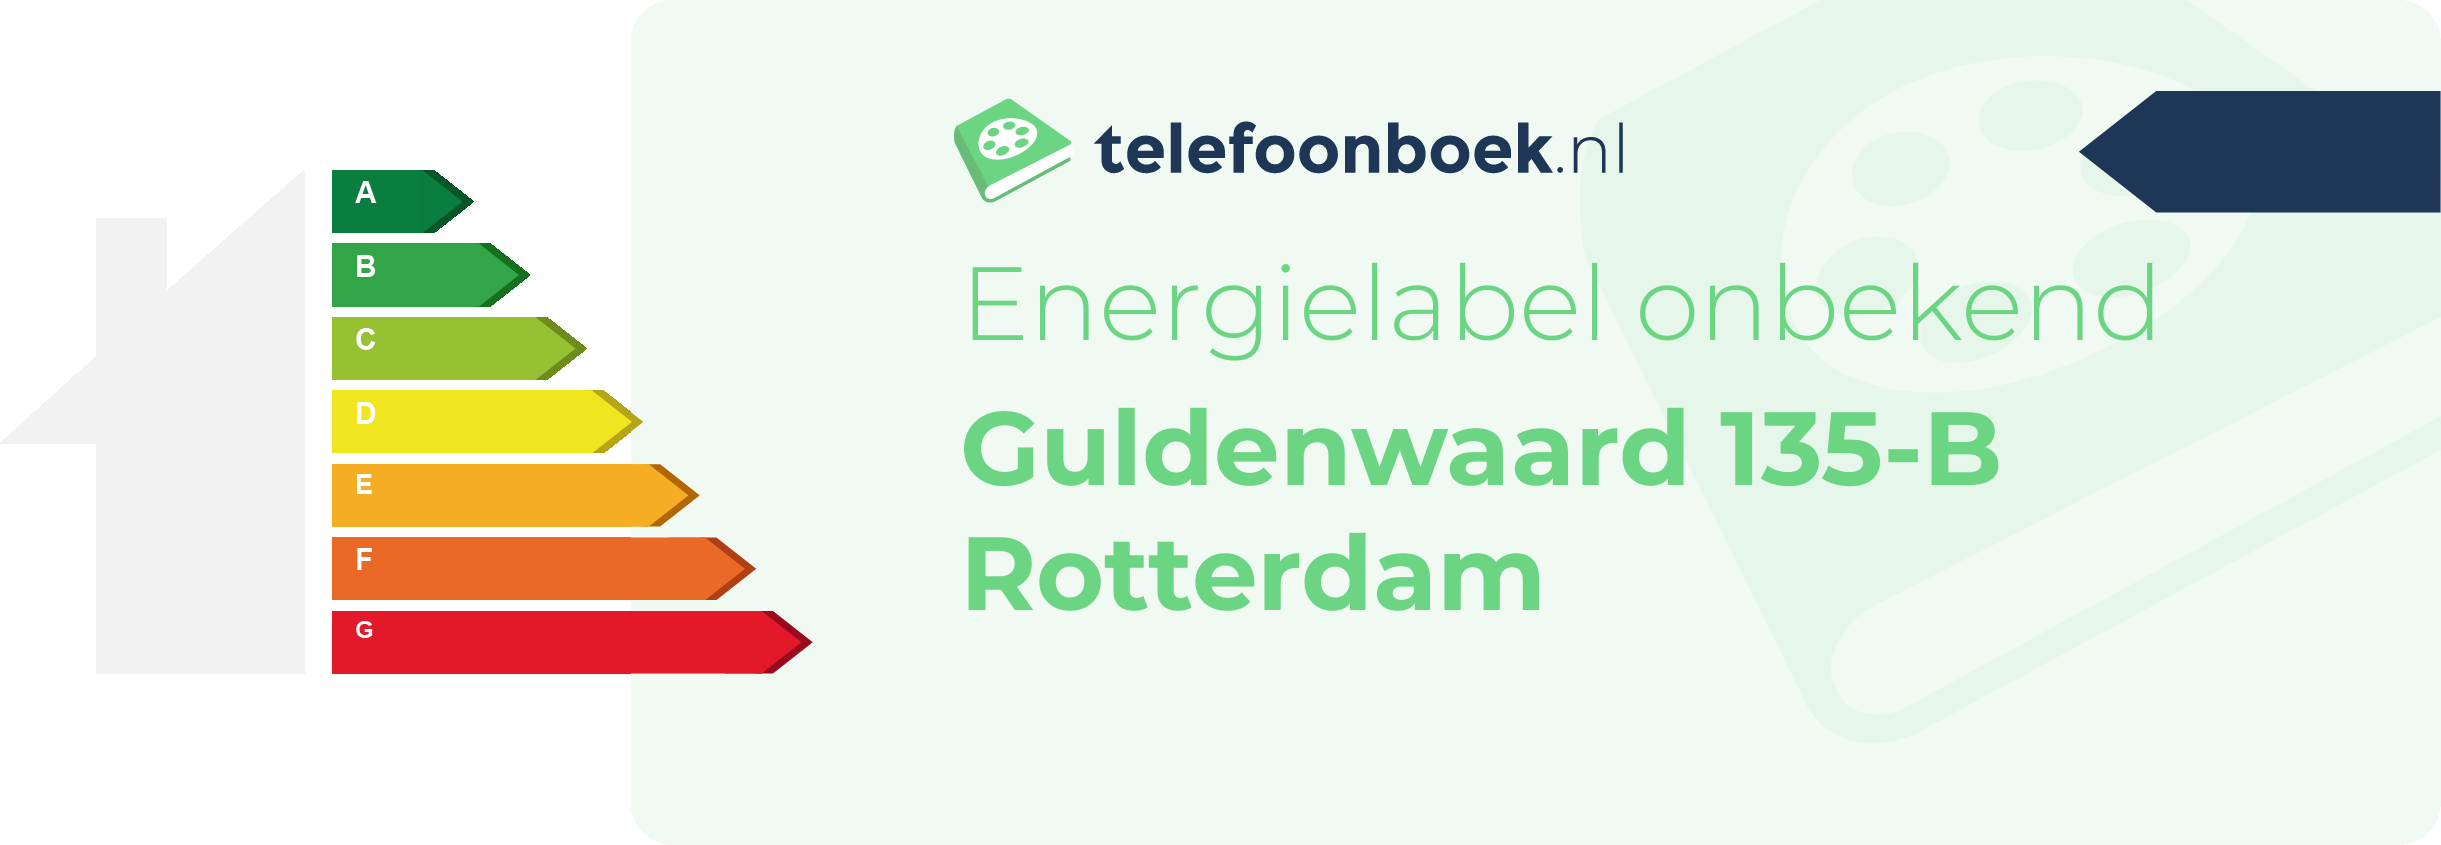 Energielabel Guldenwaard 135-B Rotterdam